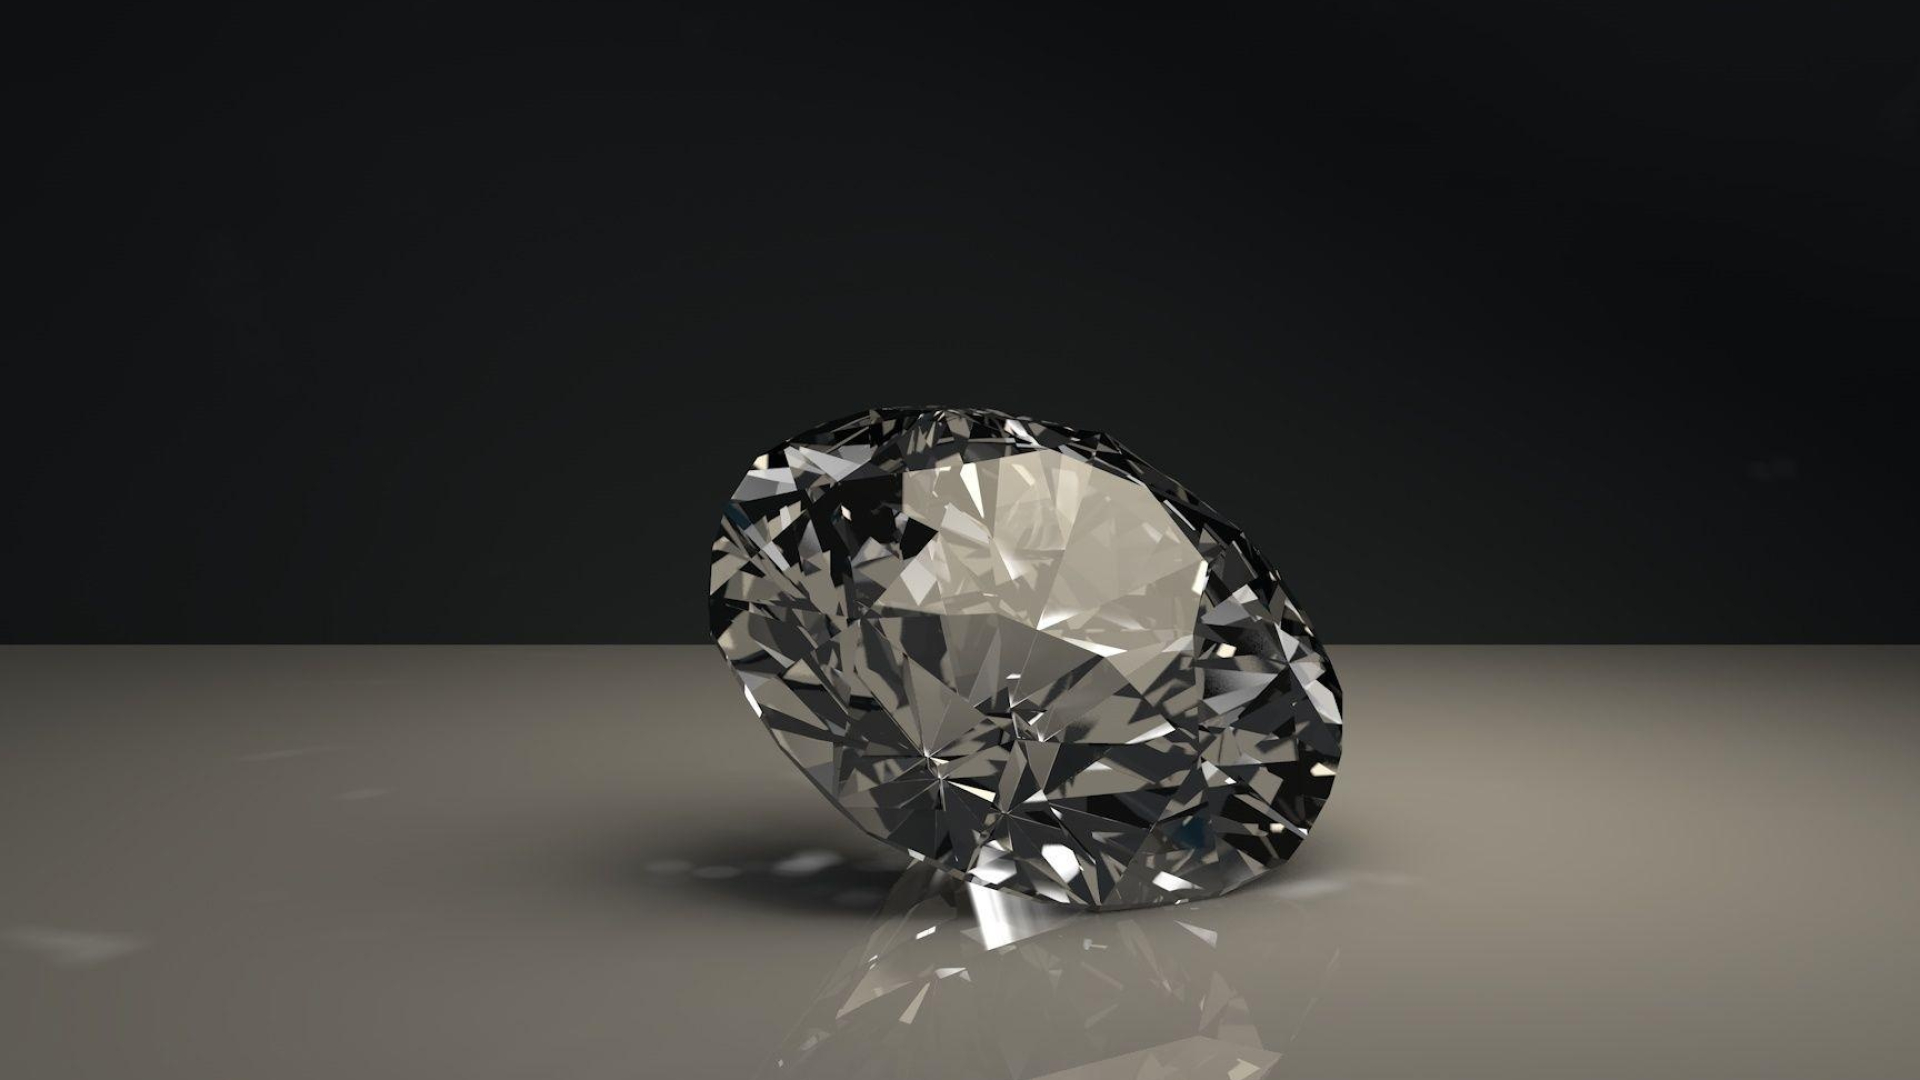 Diamond Other, Exquisite diamonds, Stunning gemstones, Luxurious jewelry, 1920x1080 Full HD Desktop